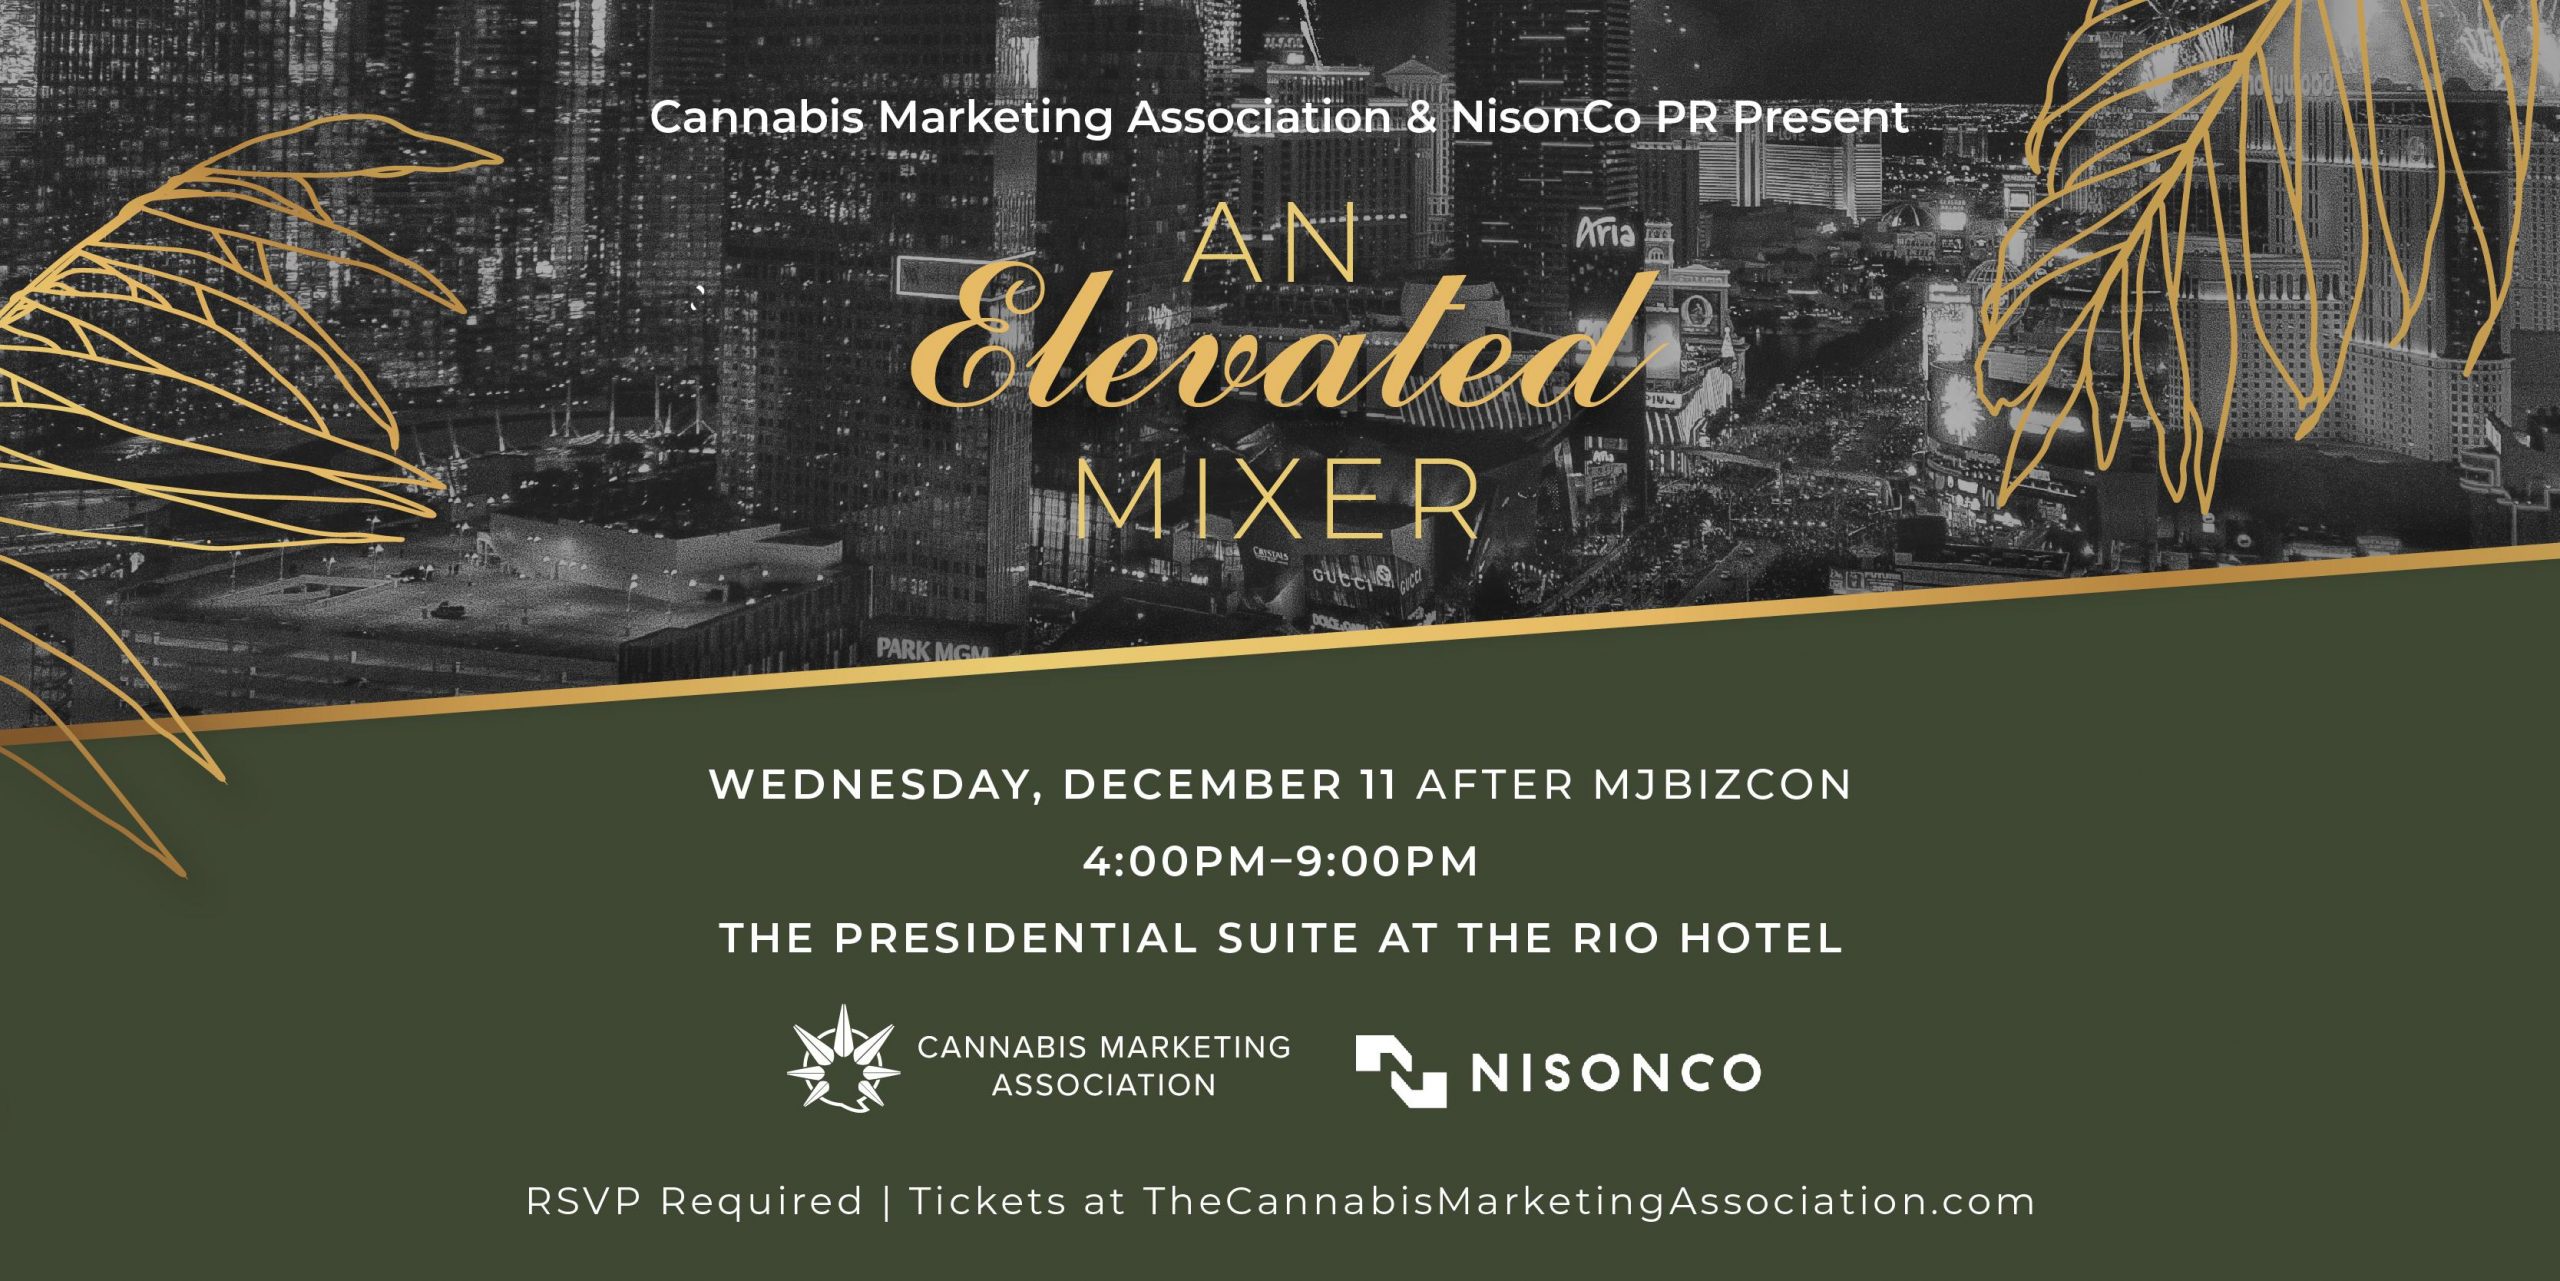 Cannabis Marketing Association & NisonCo PR present An Elevated Mixer